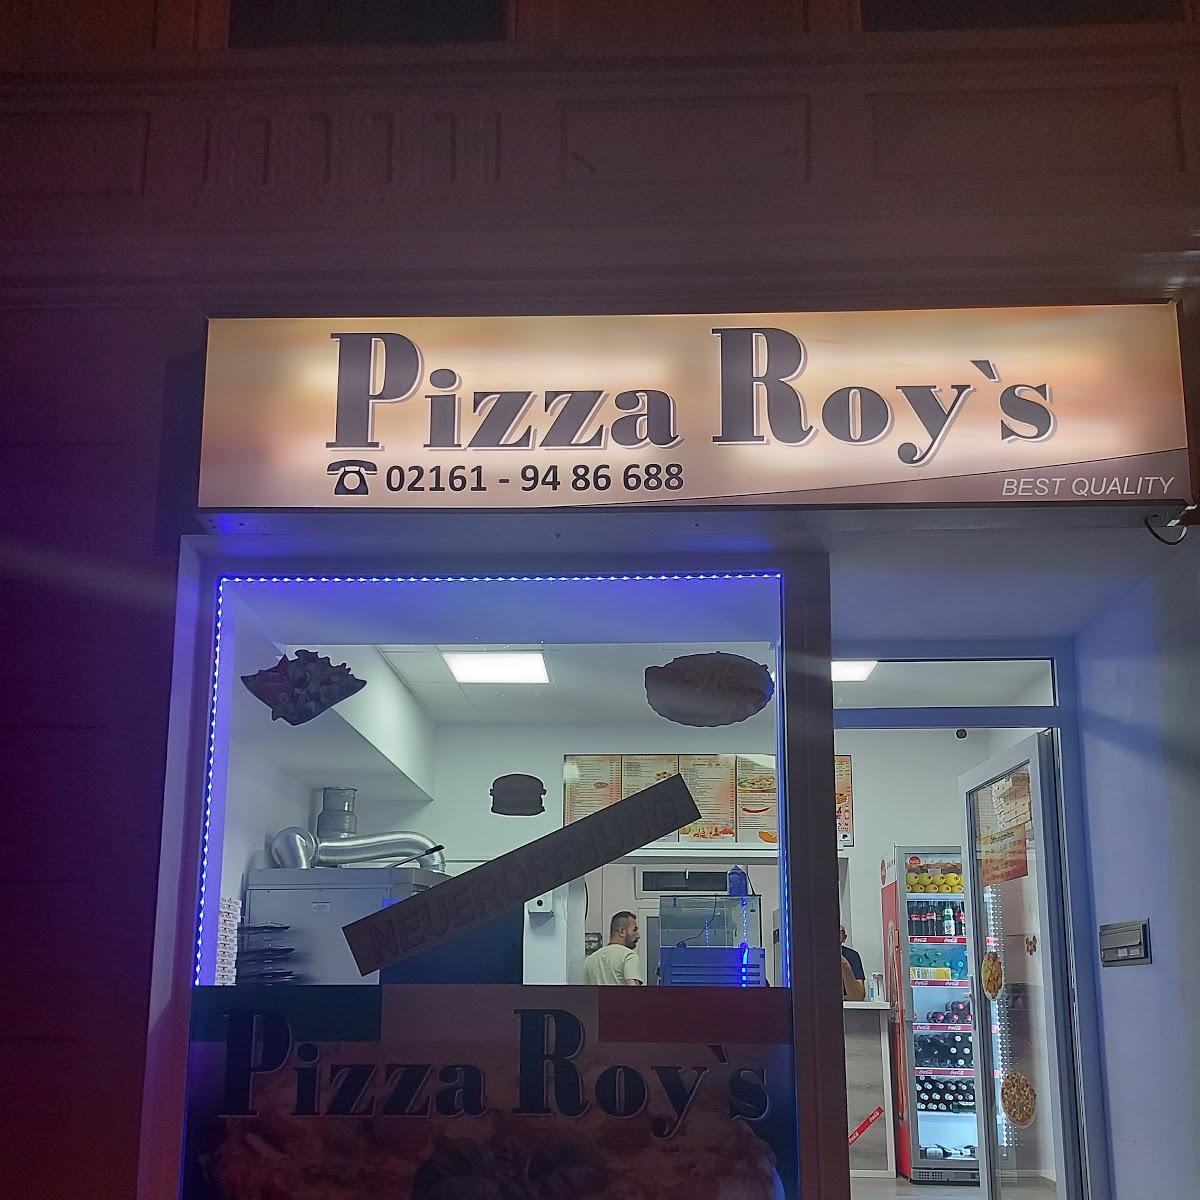 Restaurant "Pizza roy